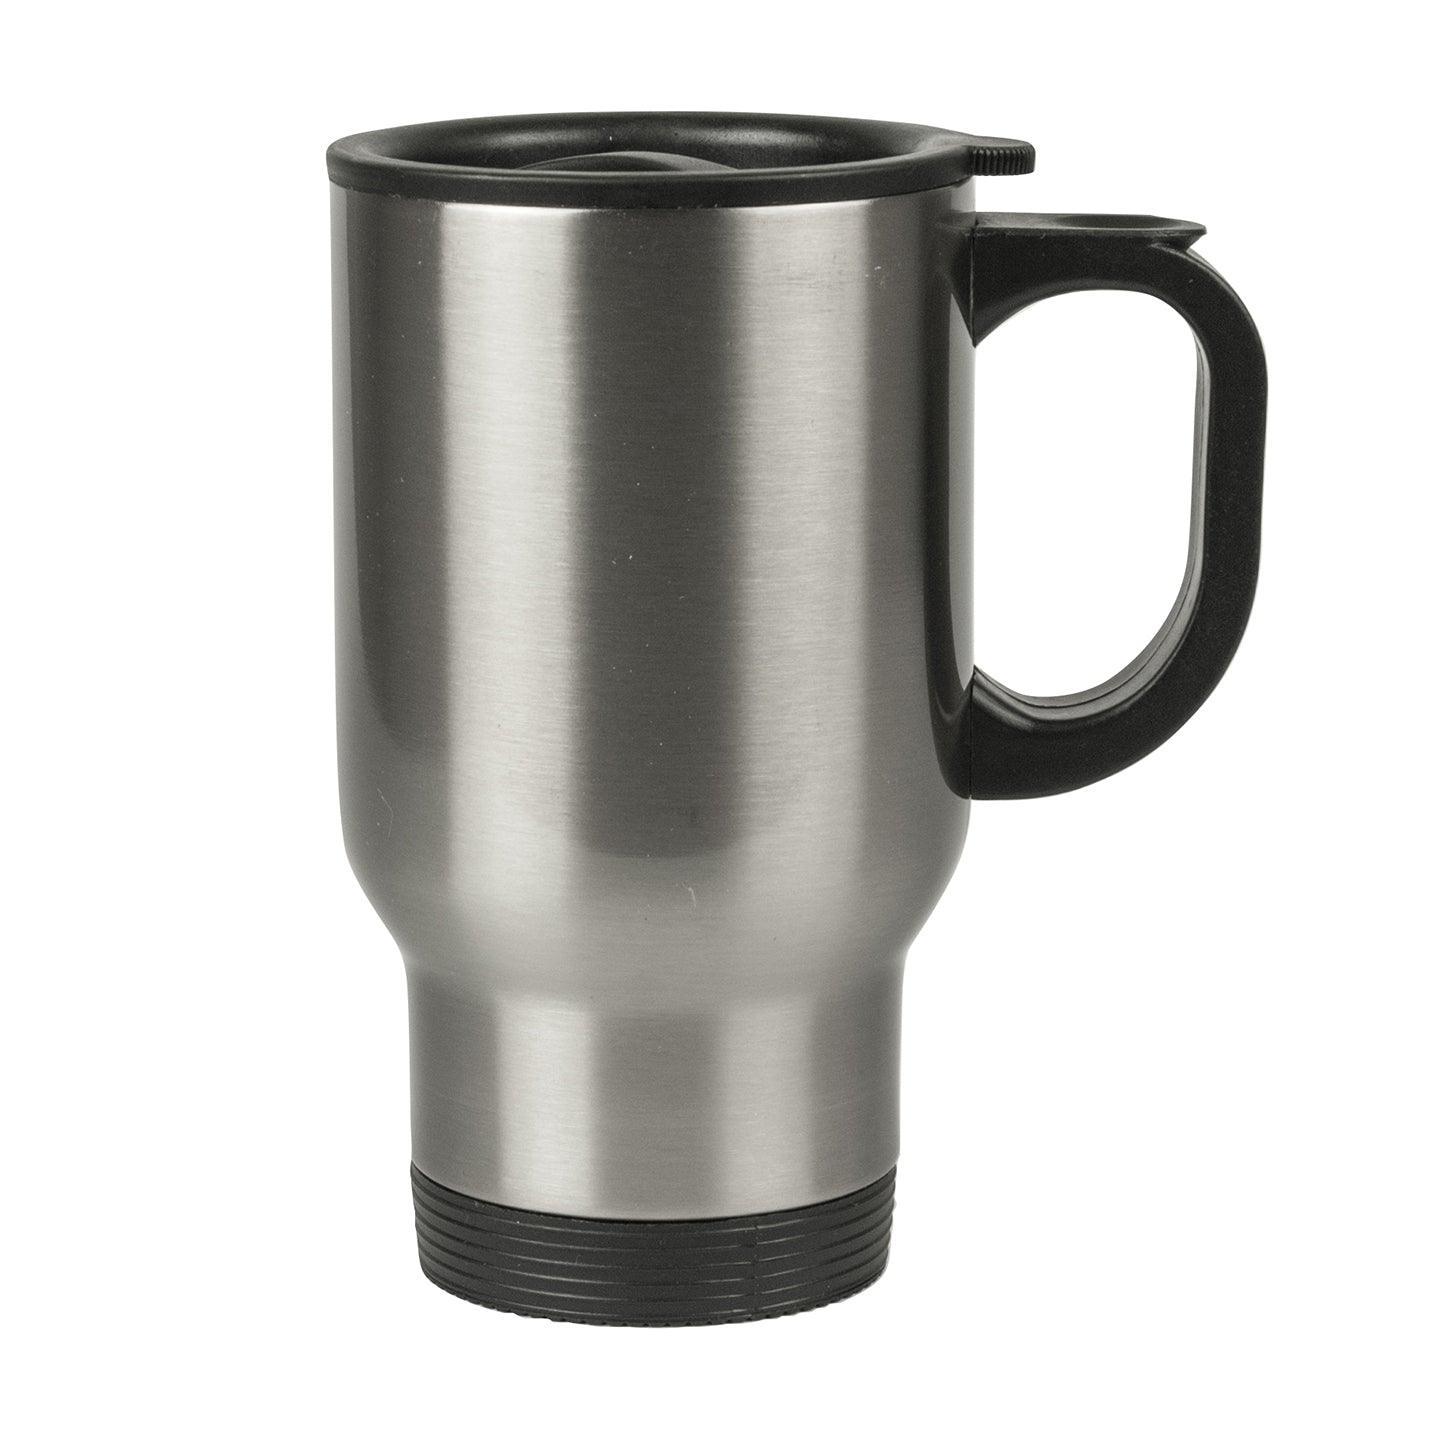 Stainless Steel Travel Mug - 16 oz.